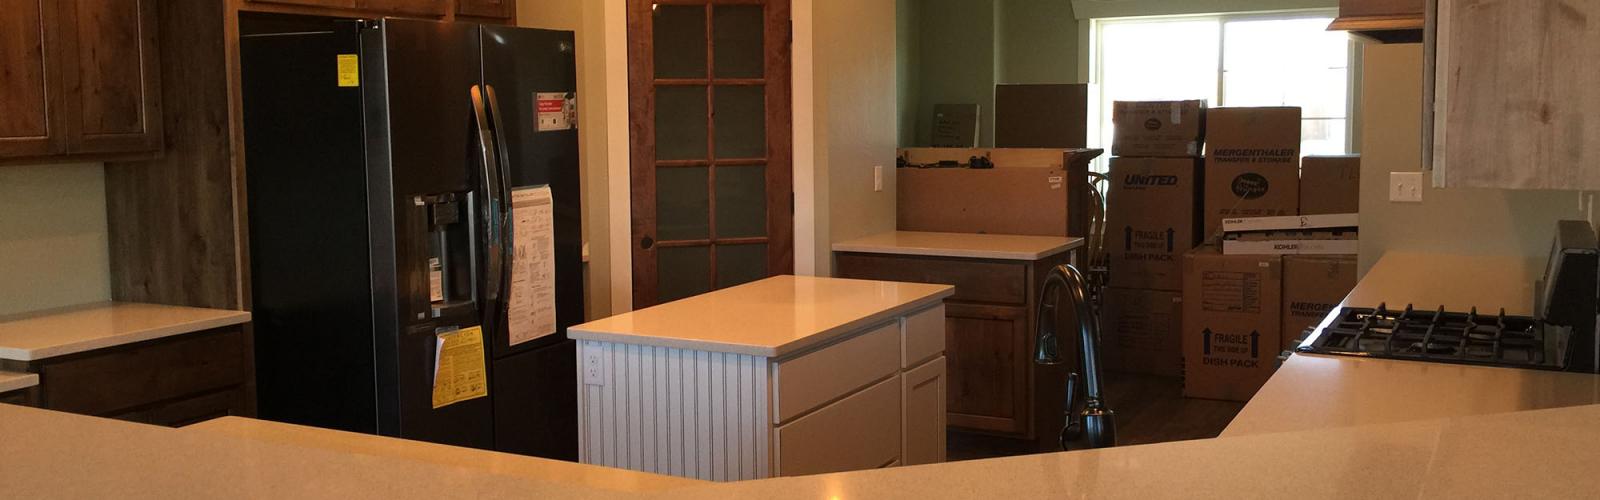 kitchen refrigerator counter cabinets island bar complete